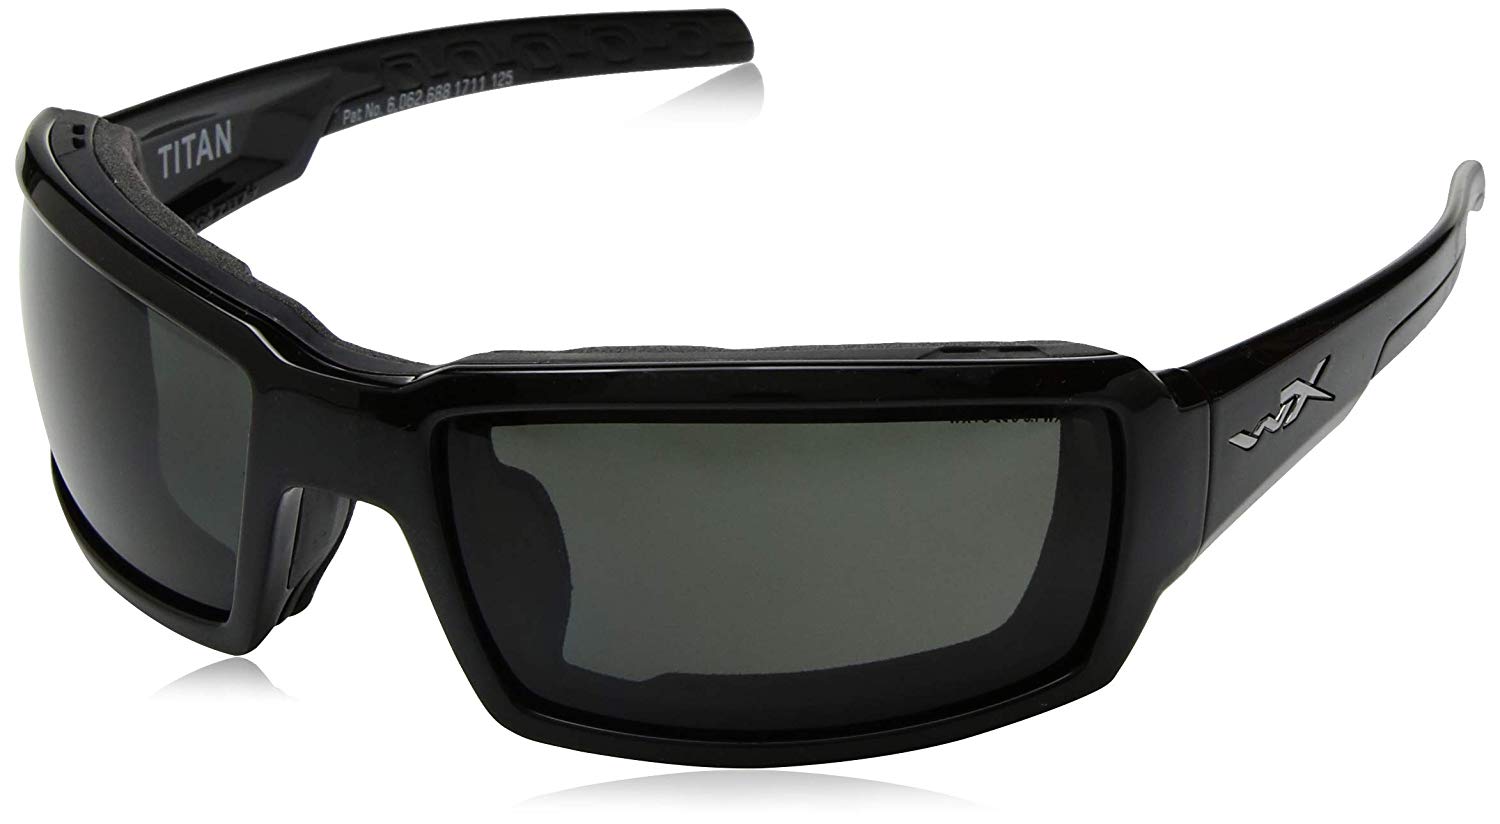 Wiley X Sunglasses - Sportinglife Turangi 